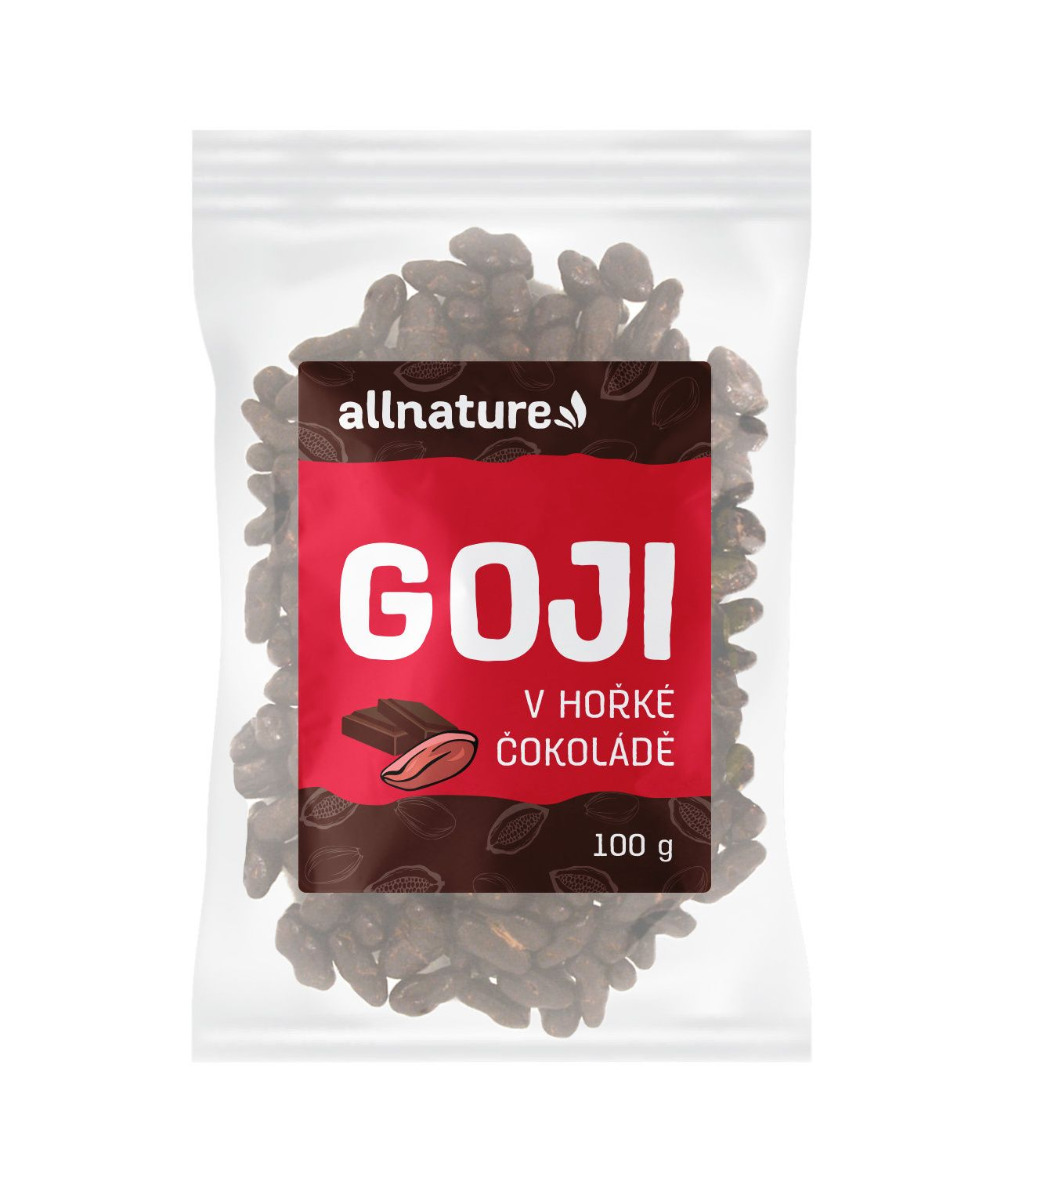 Allnature Goji v hořké čokoládě 100 g Allnature